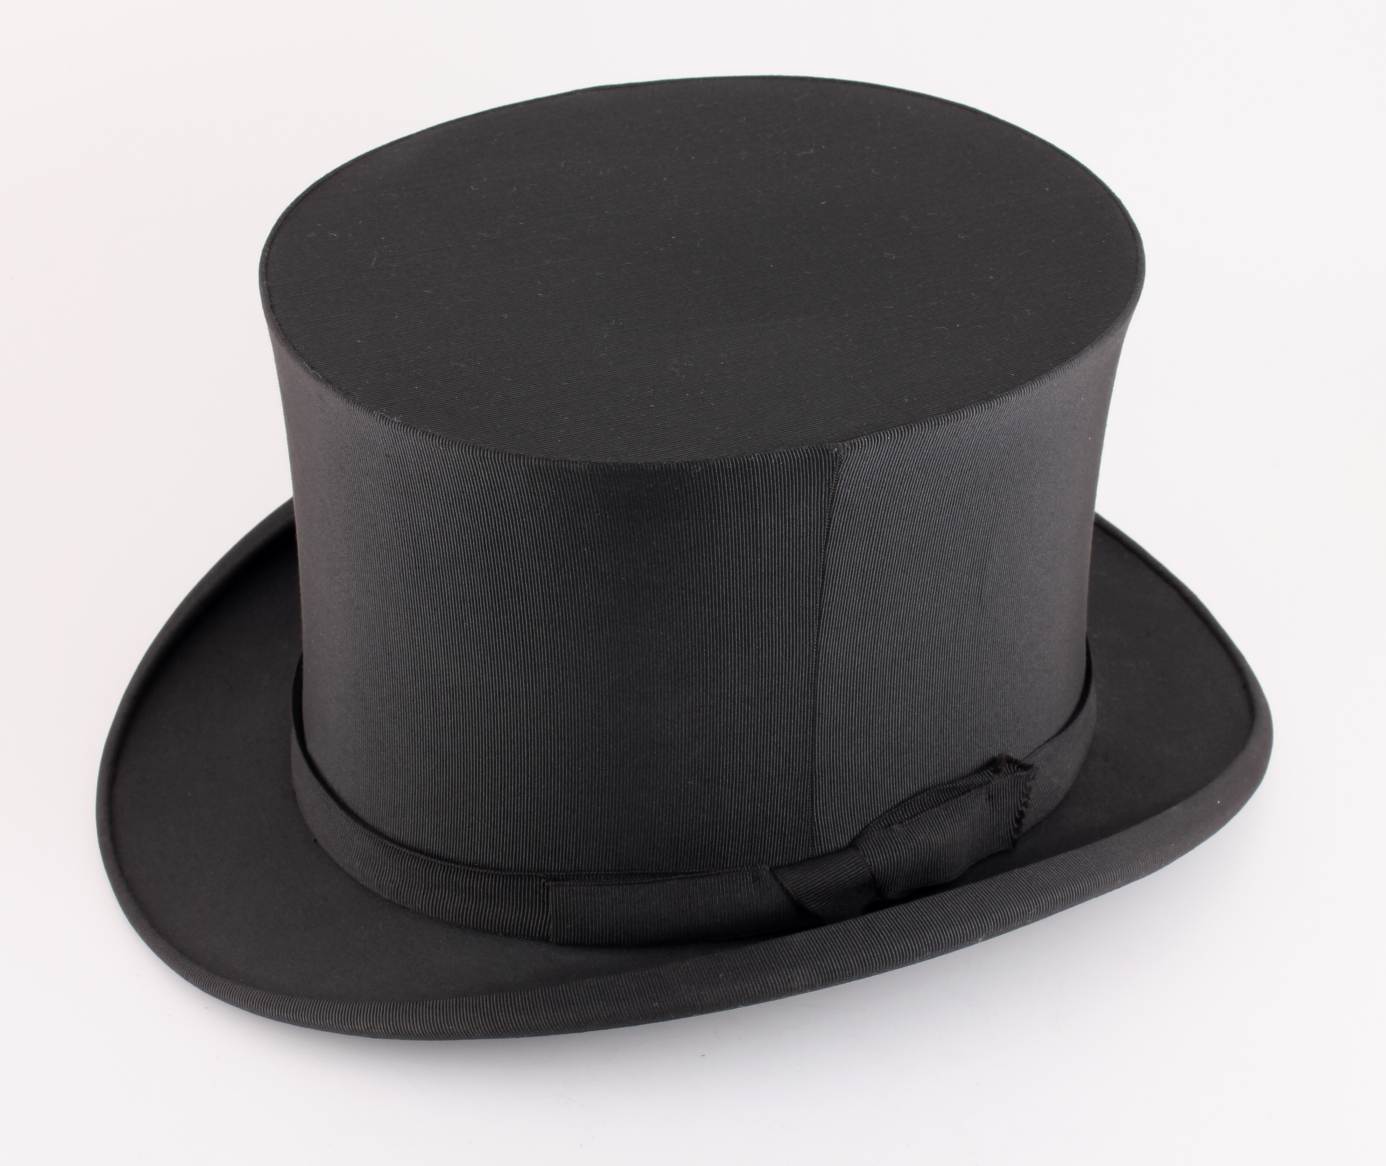 Berteil Black Opera Top Hat. Collapsible Pop Up. Wedding, Ascot. UK 7.